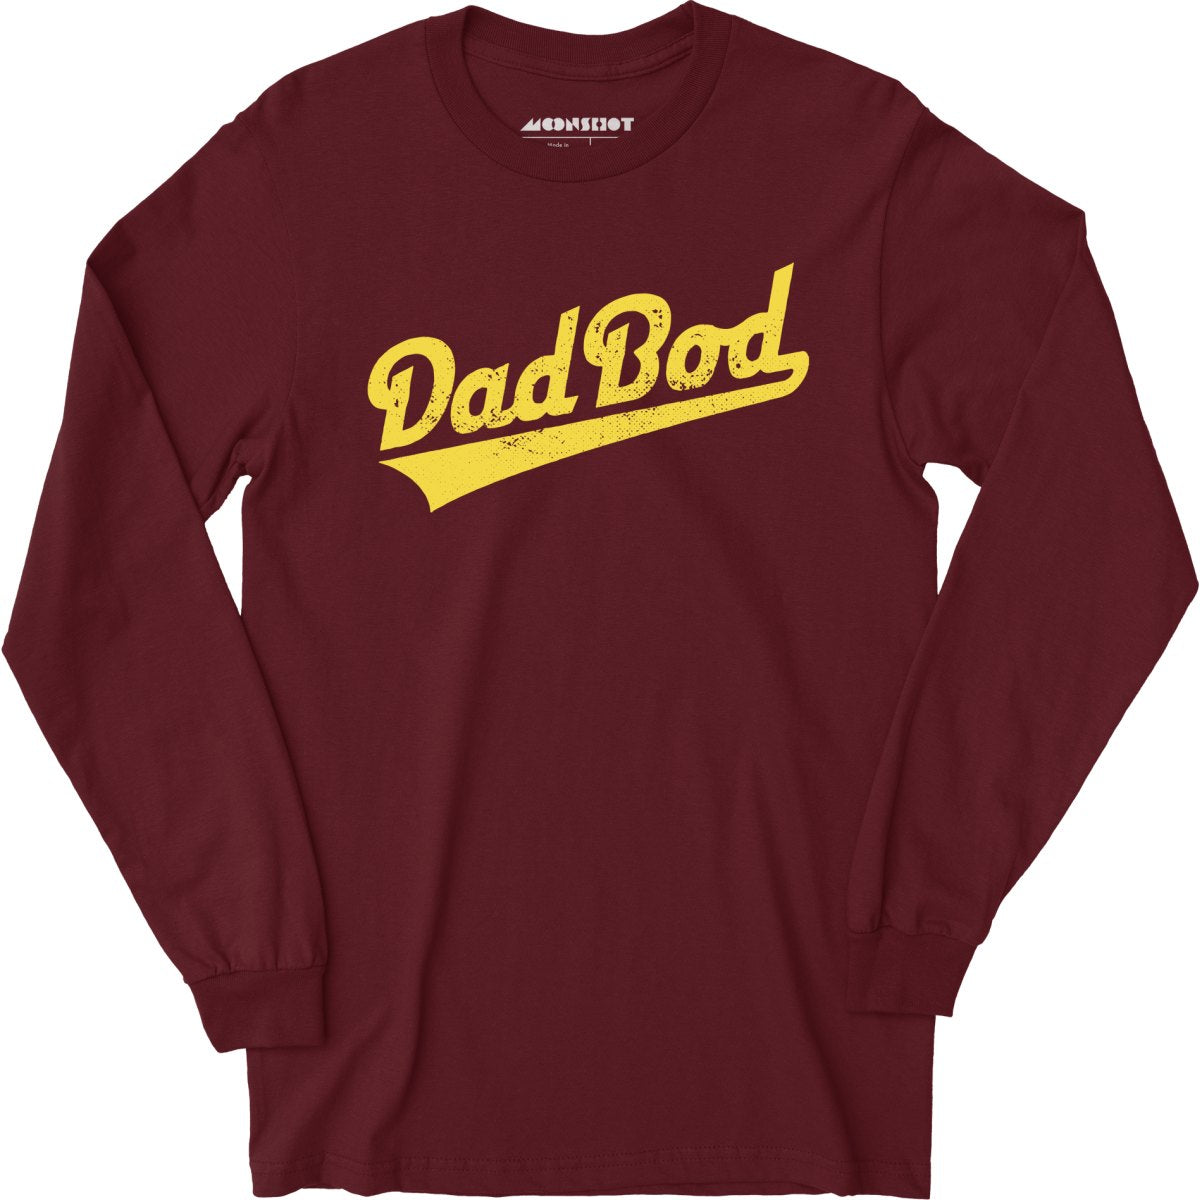 Dad Bod - Long Sleeve T-Shirt